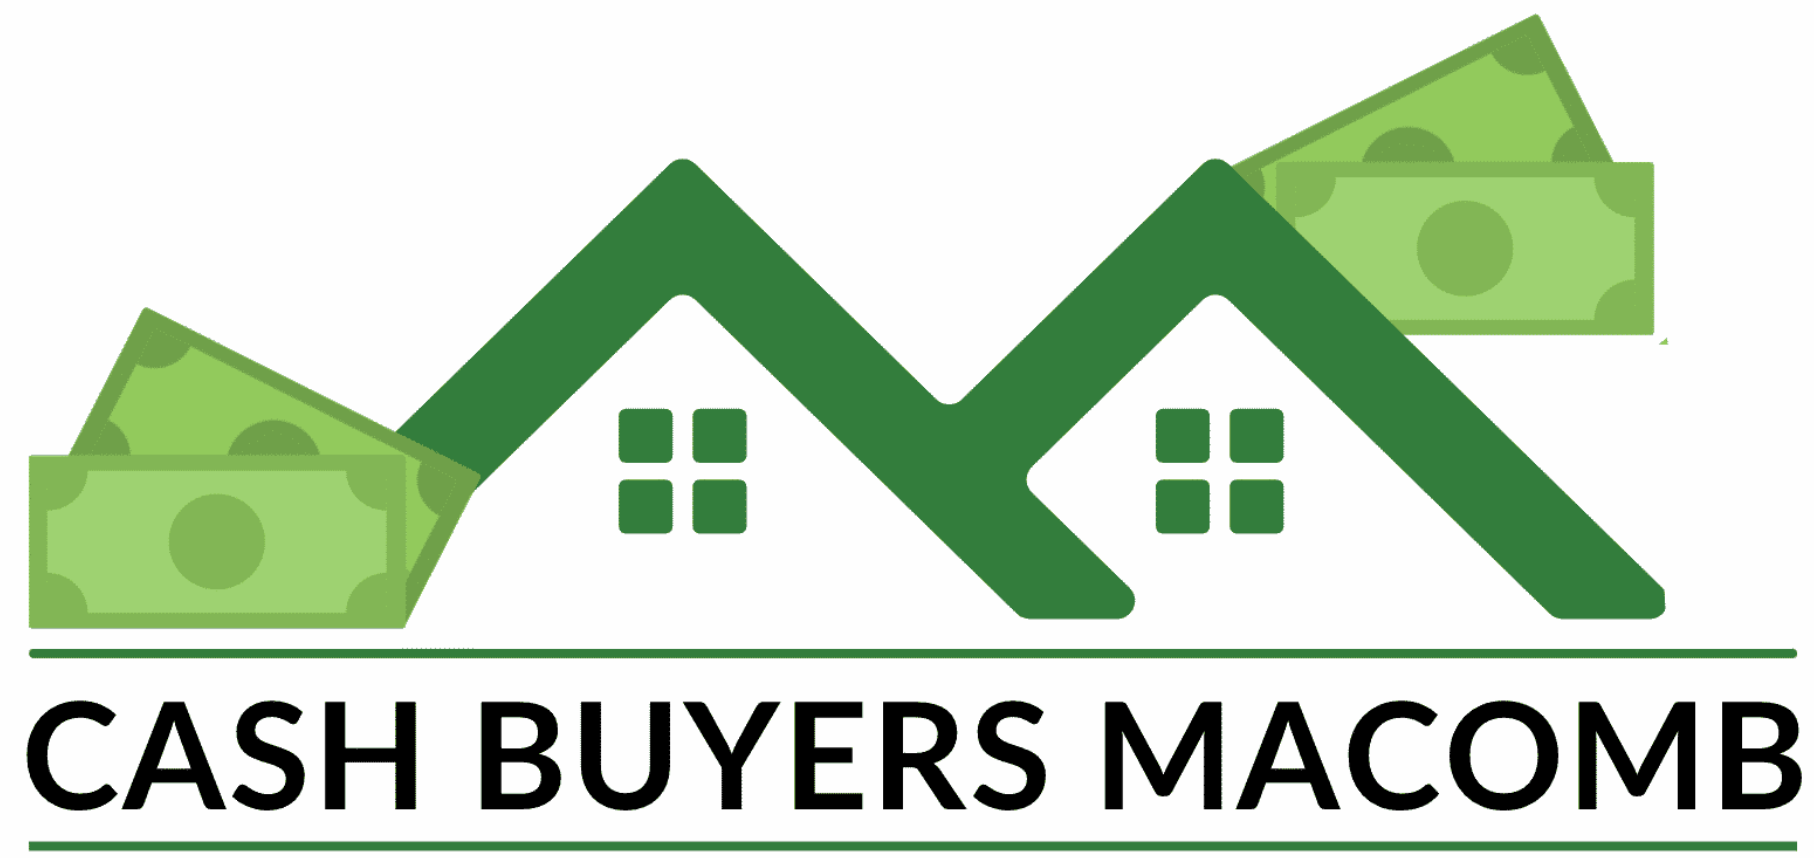 Cash Buyers Macomb - We Buy Houses Michigan Logo